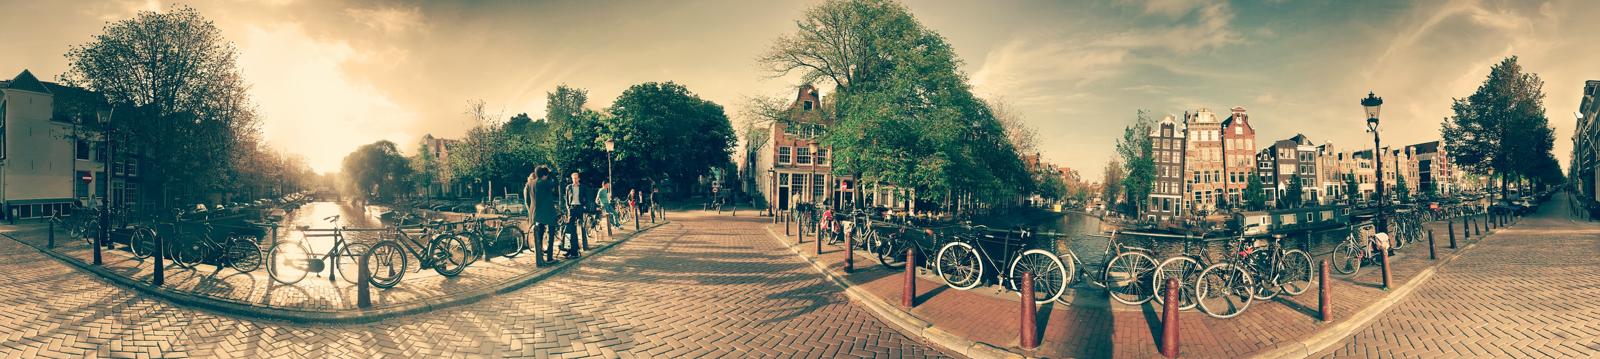 Sepiatonned Amsterdam street